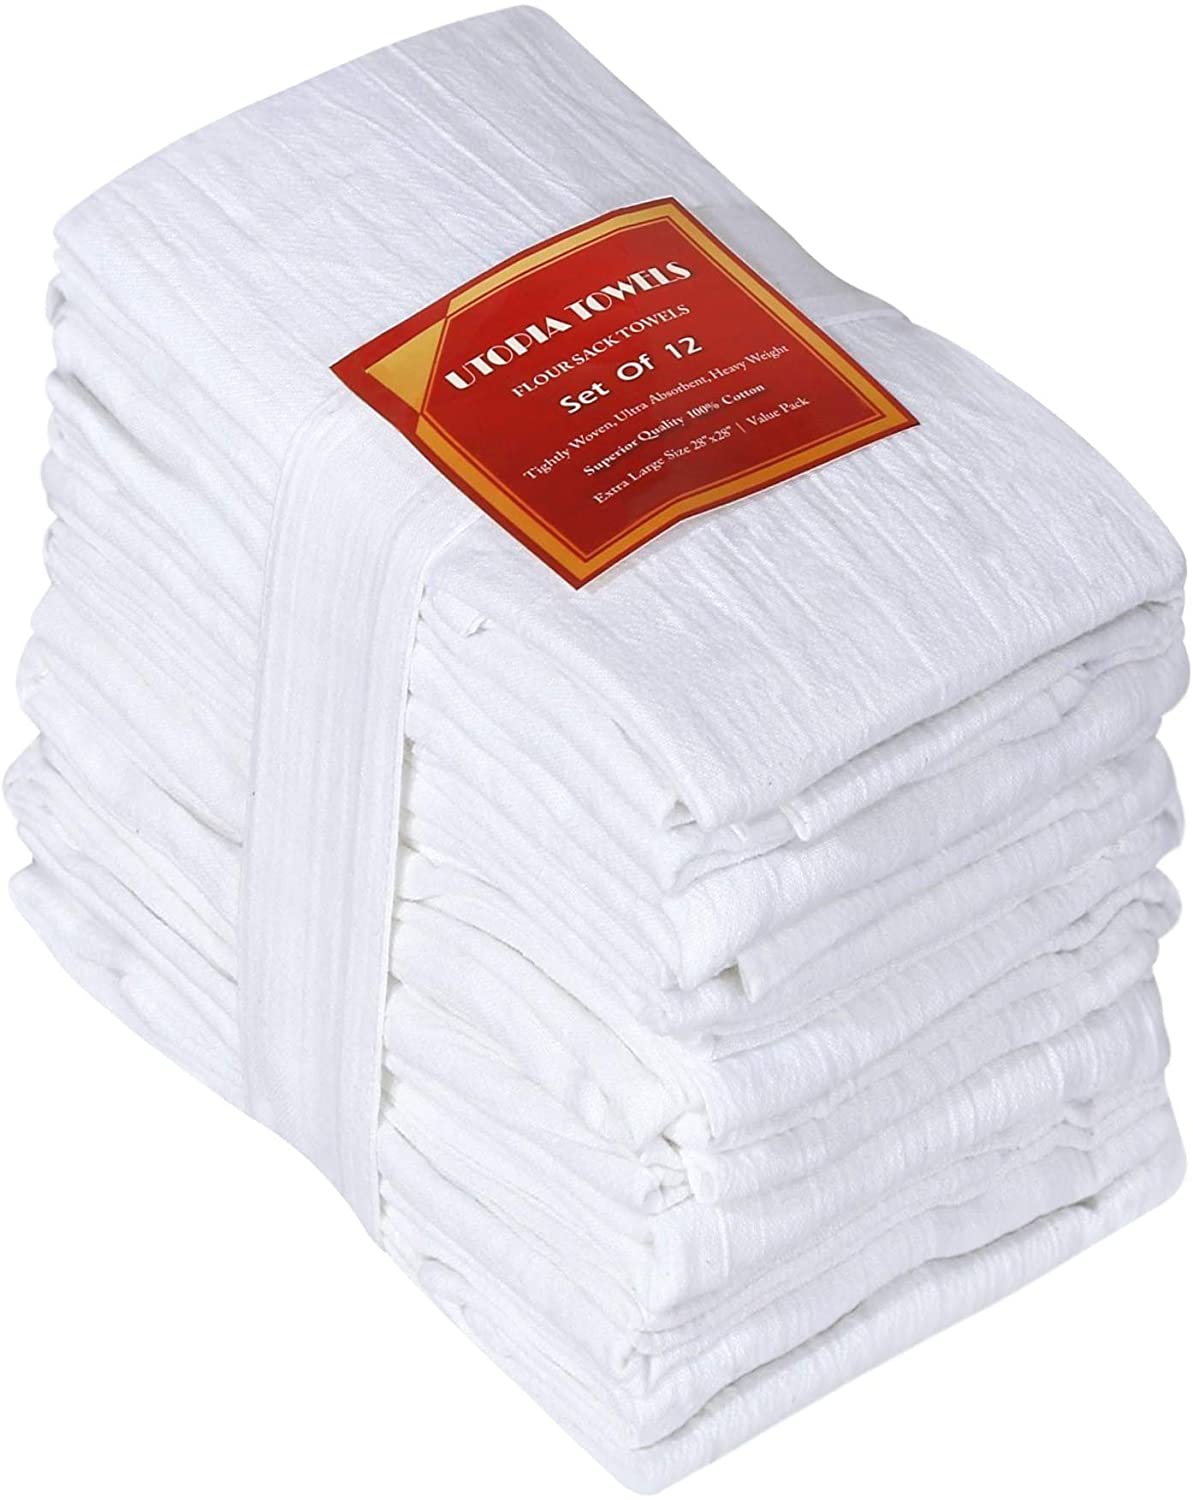 Ruvanti 6 Pack Extra Large Flour Sack Towels 28x28 inch 100